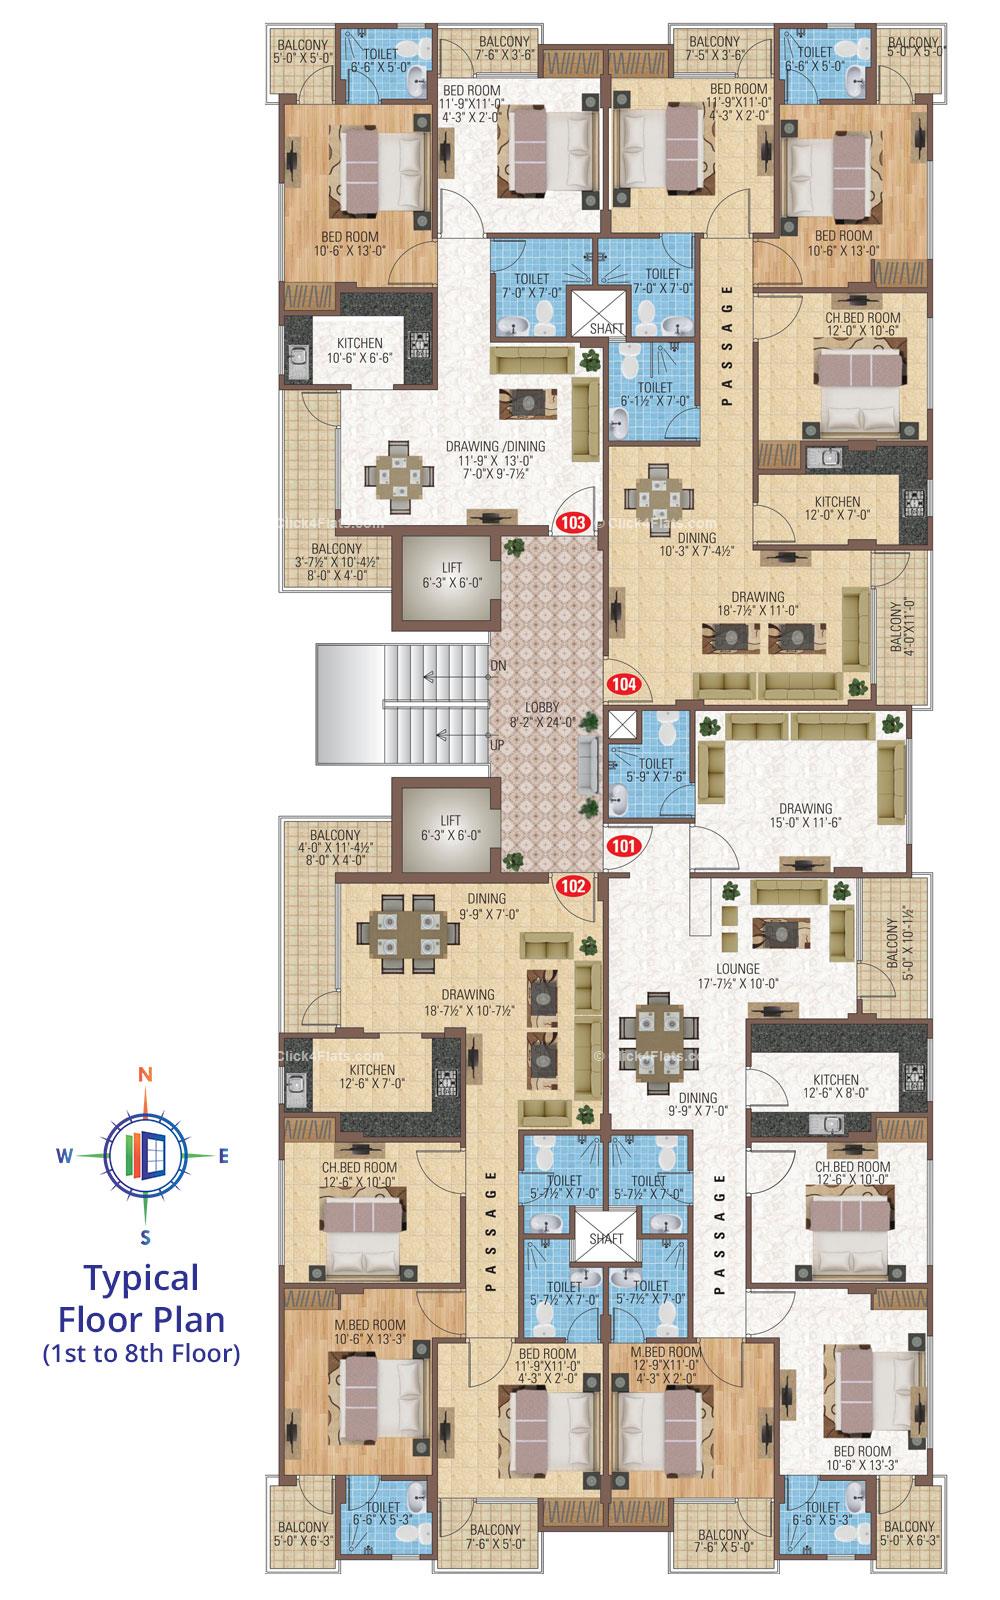 SDC Aishwarya Heights Typical Floor Plan